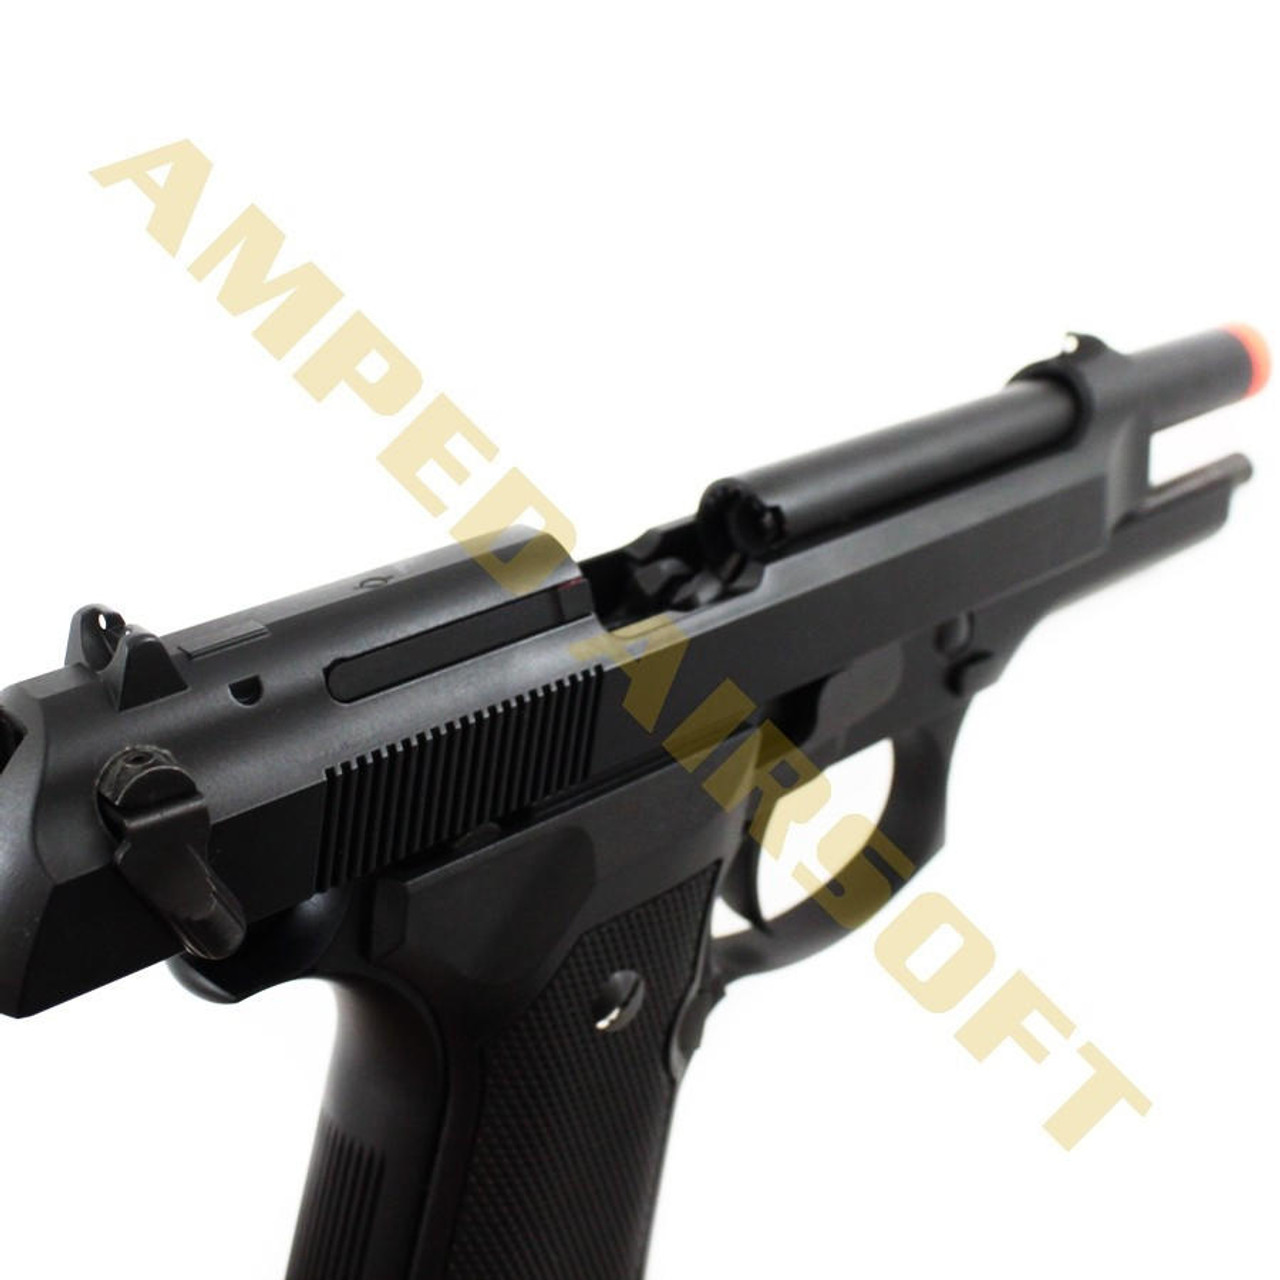  KWA - M9 PTP (Professional Training Pistol) Gas Blow Back 